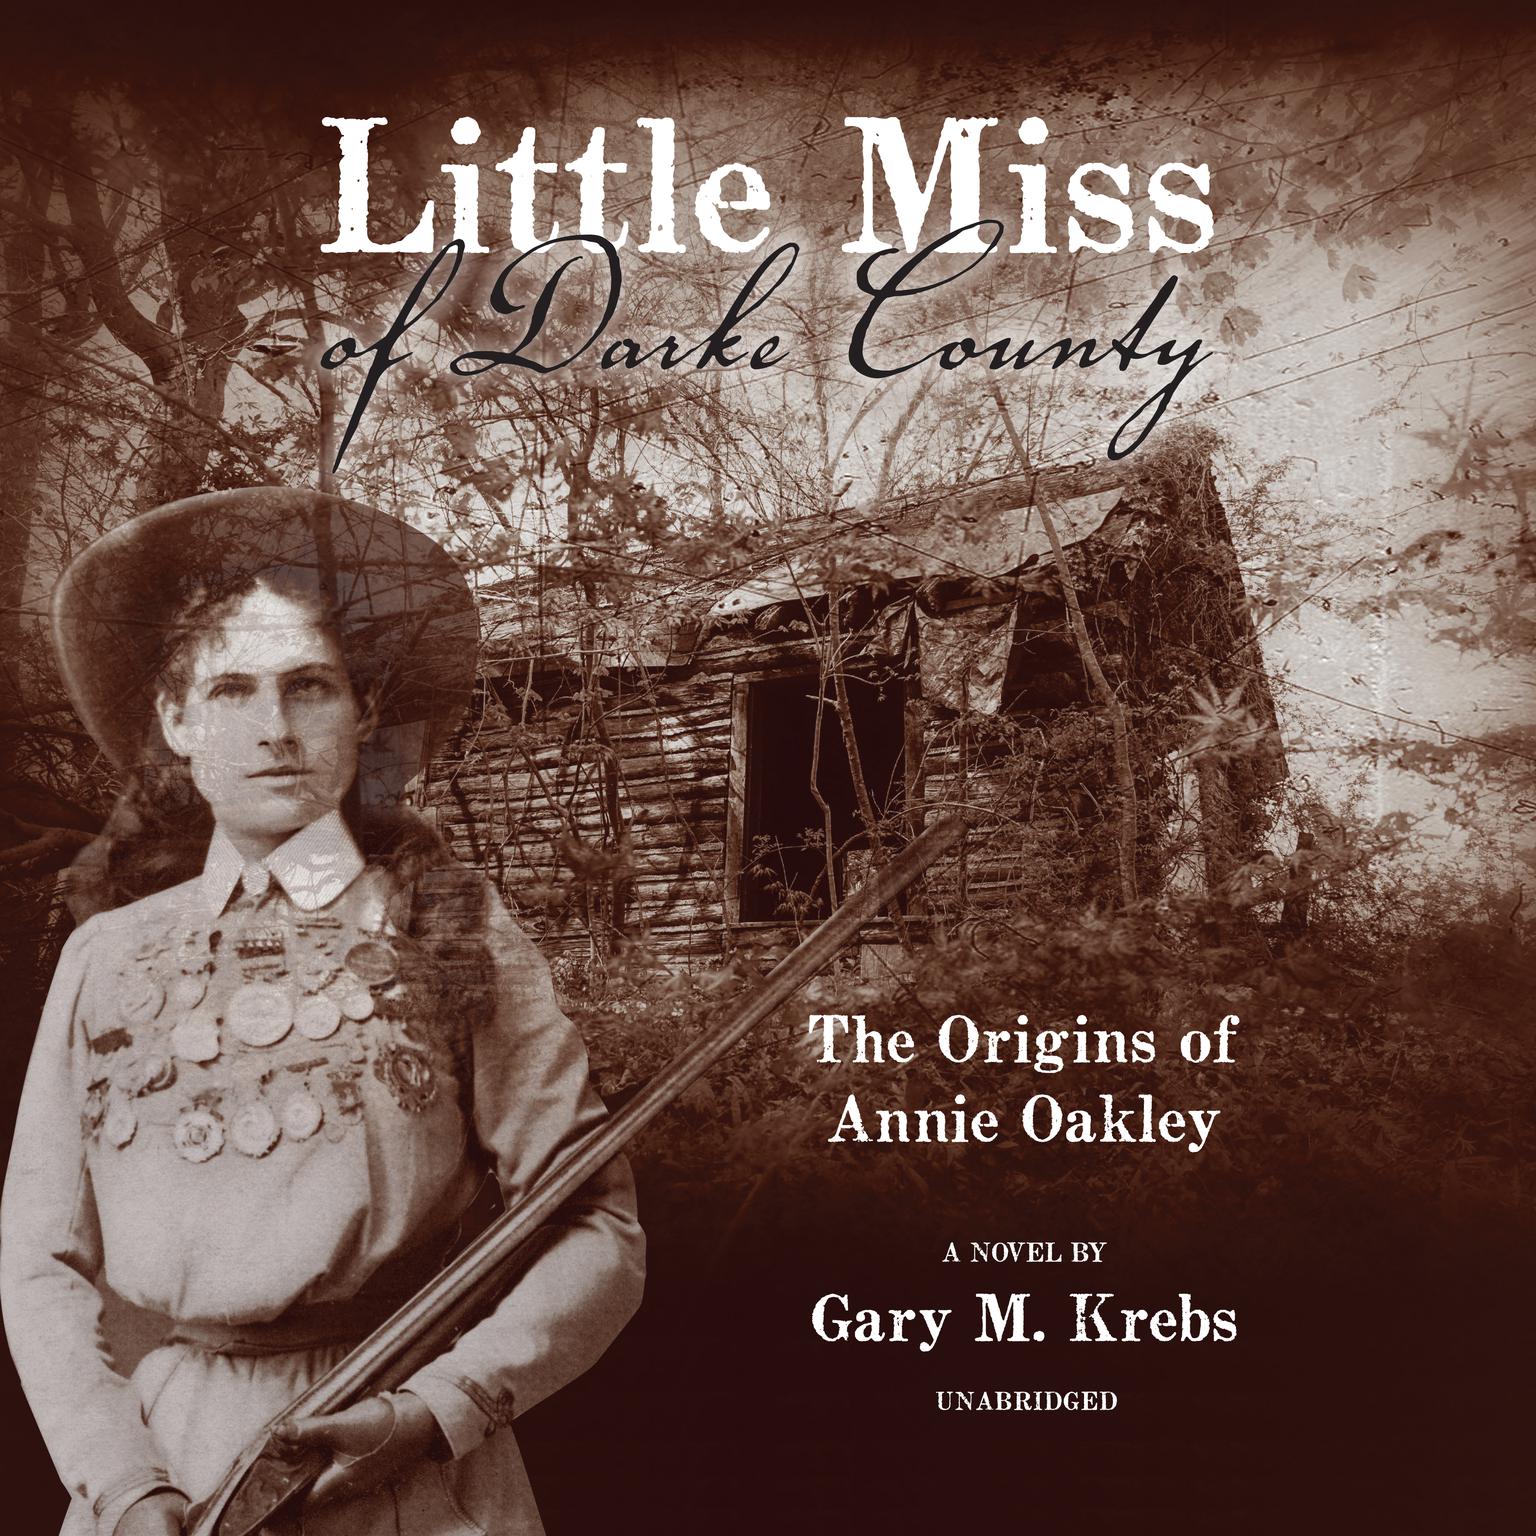 Little Miss of Darke County: The Origins of Annie Oakley: A Novel Audiobook, by Gary M. Krebs